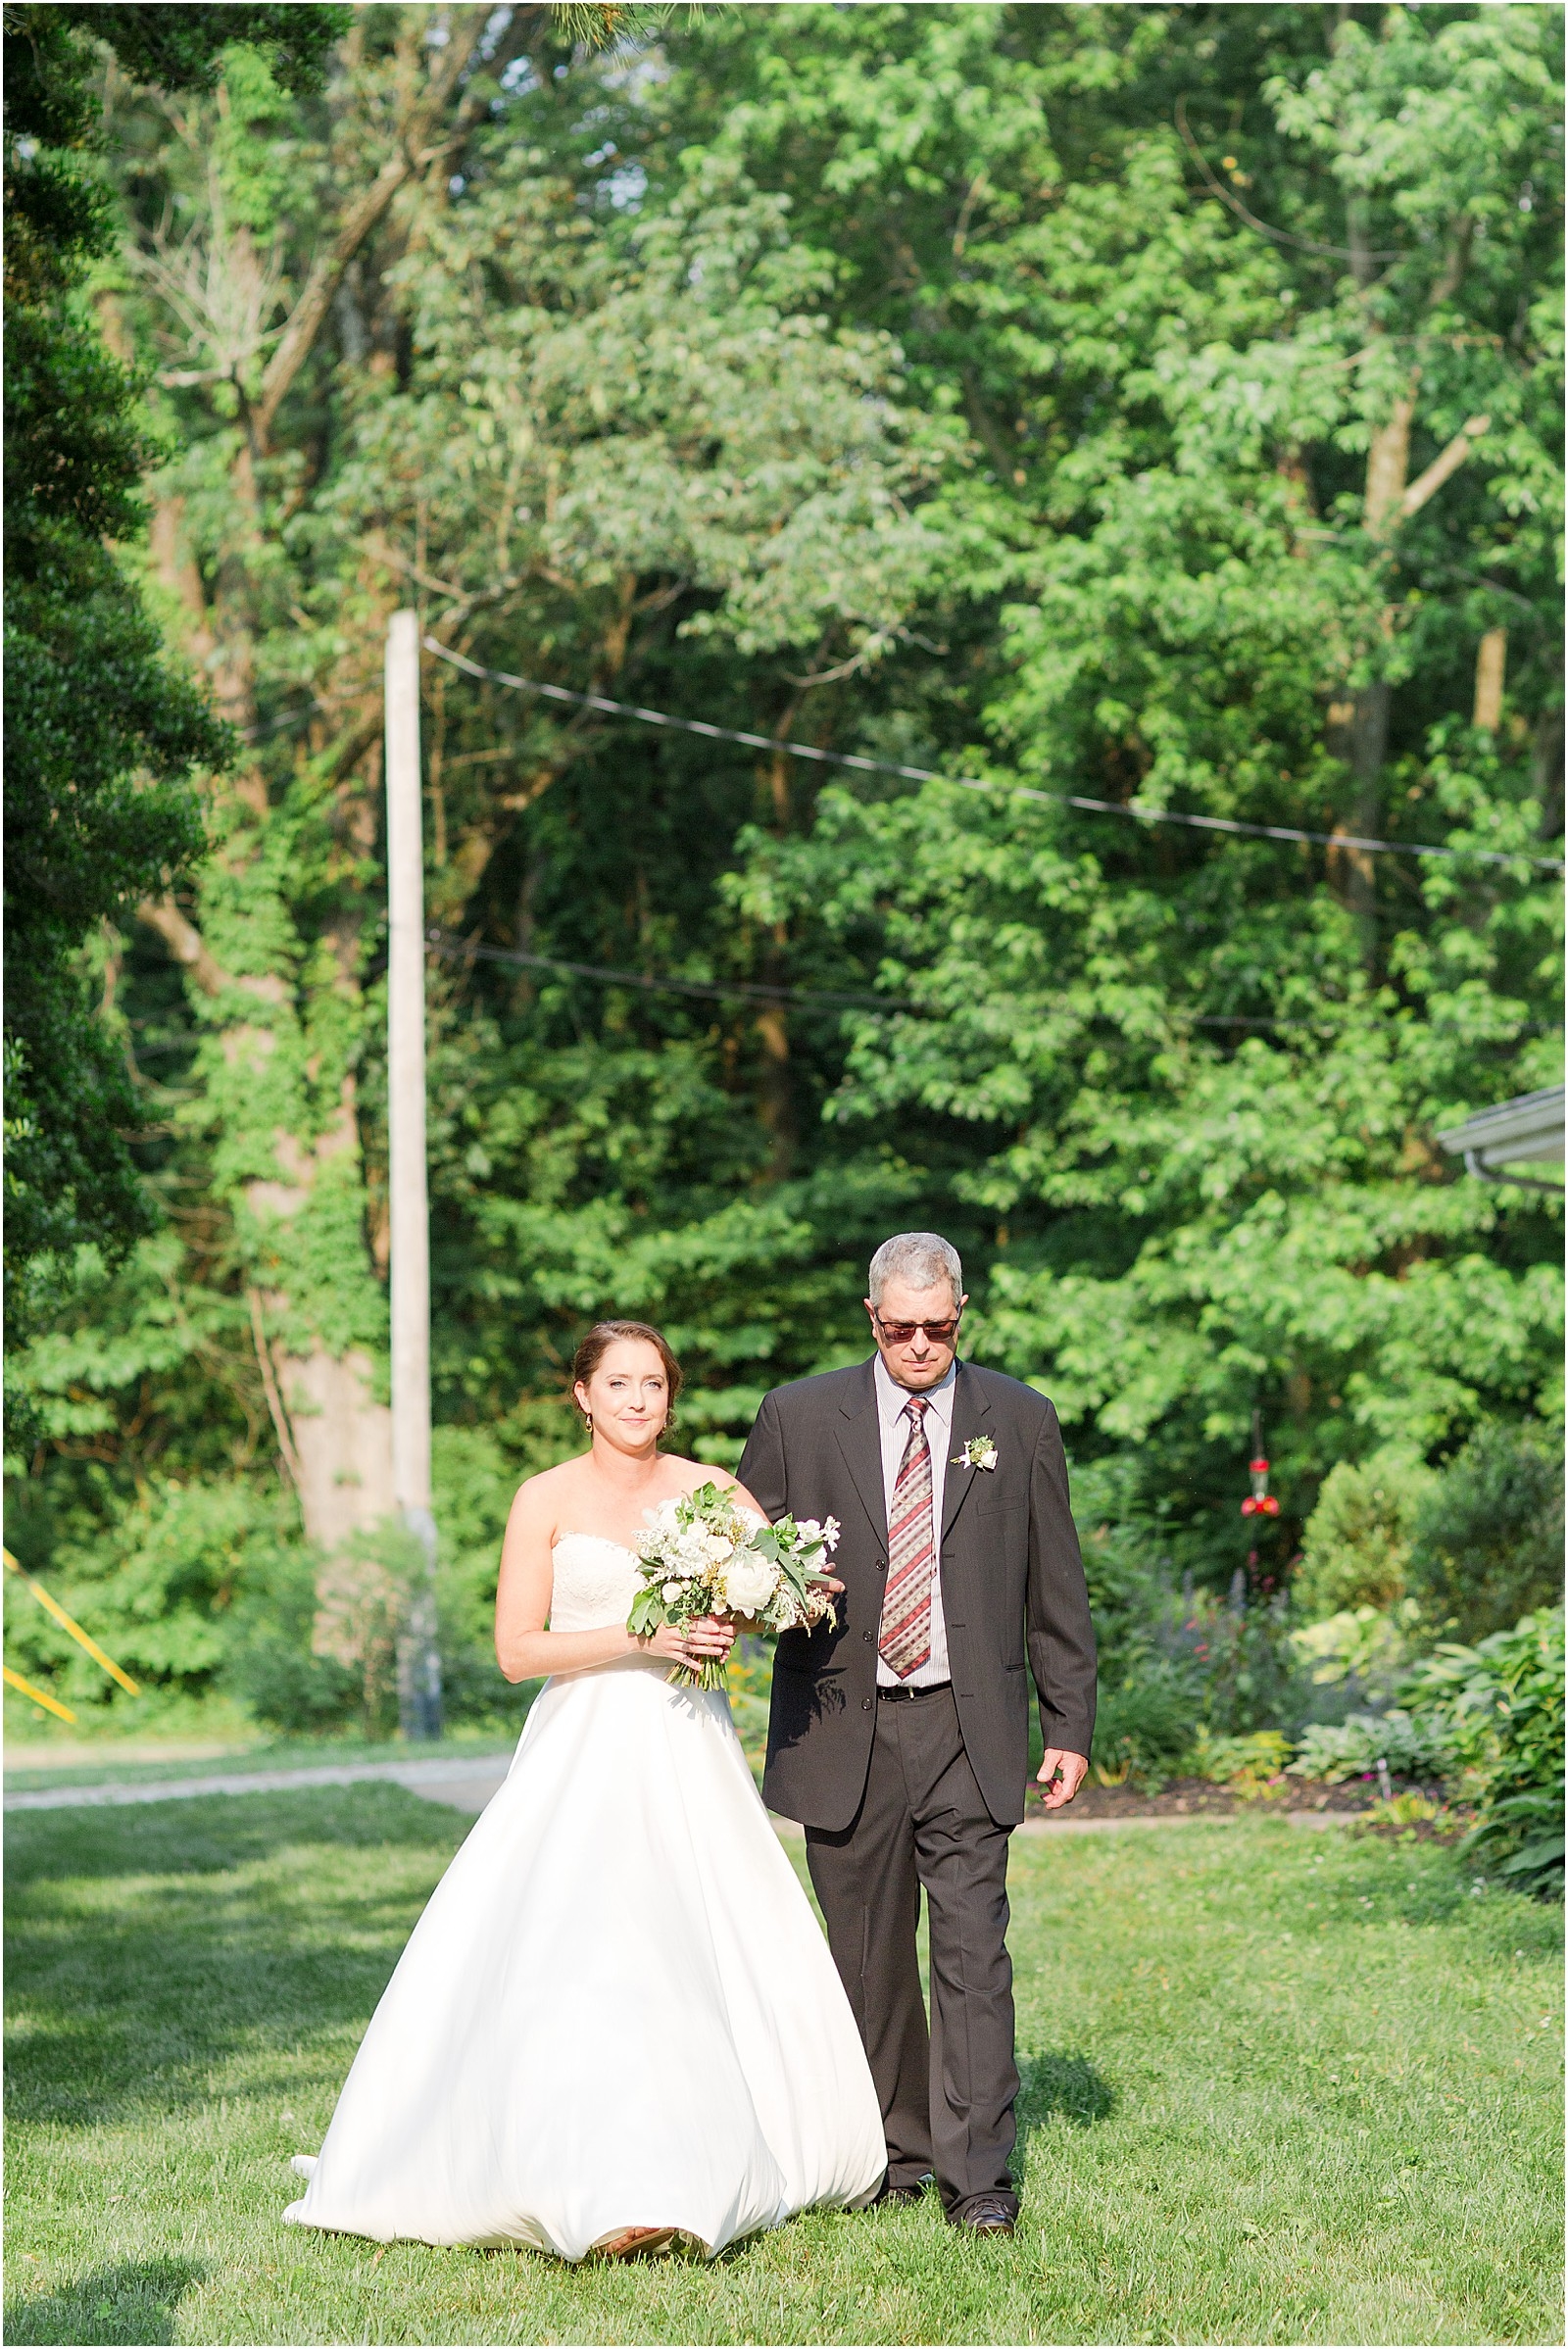 A Evansville Indiana Backyard Wedding | Bailey and Ben 059.jpg